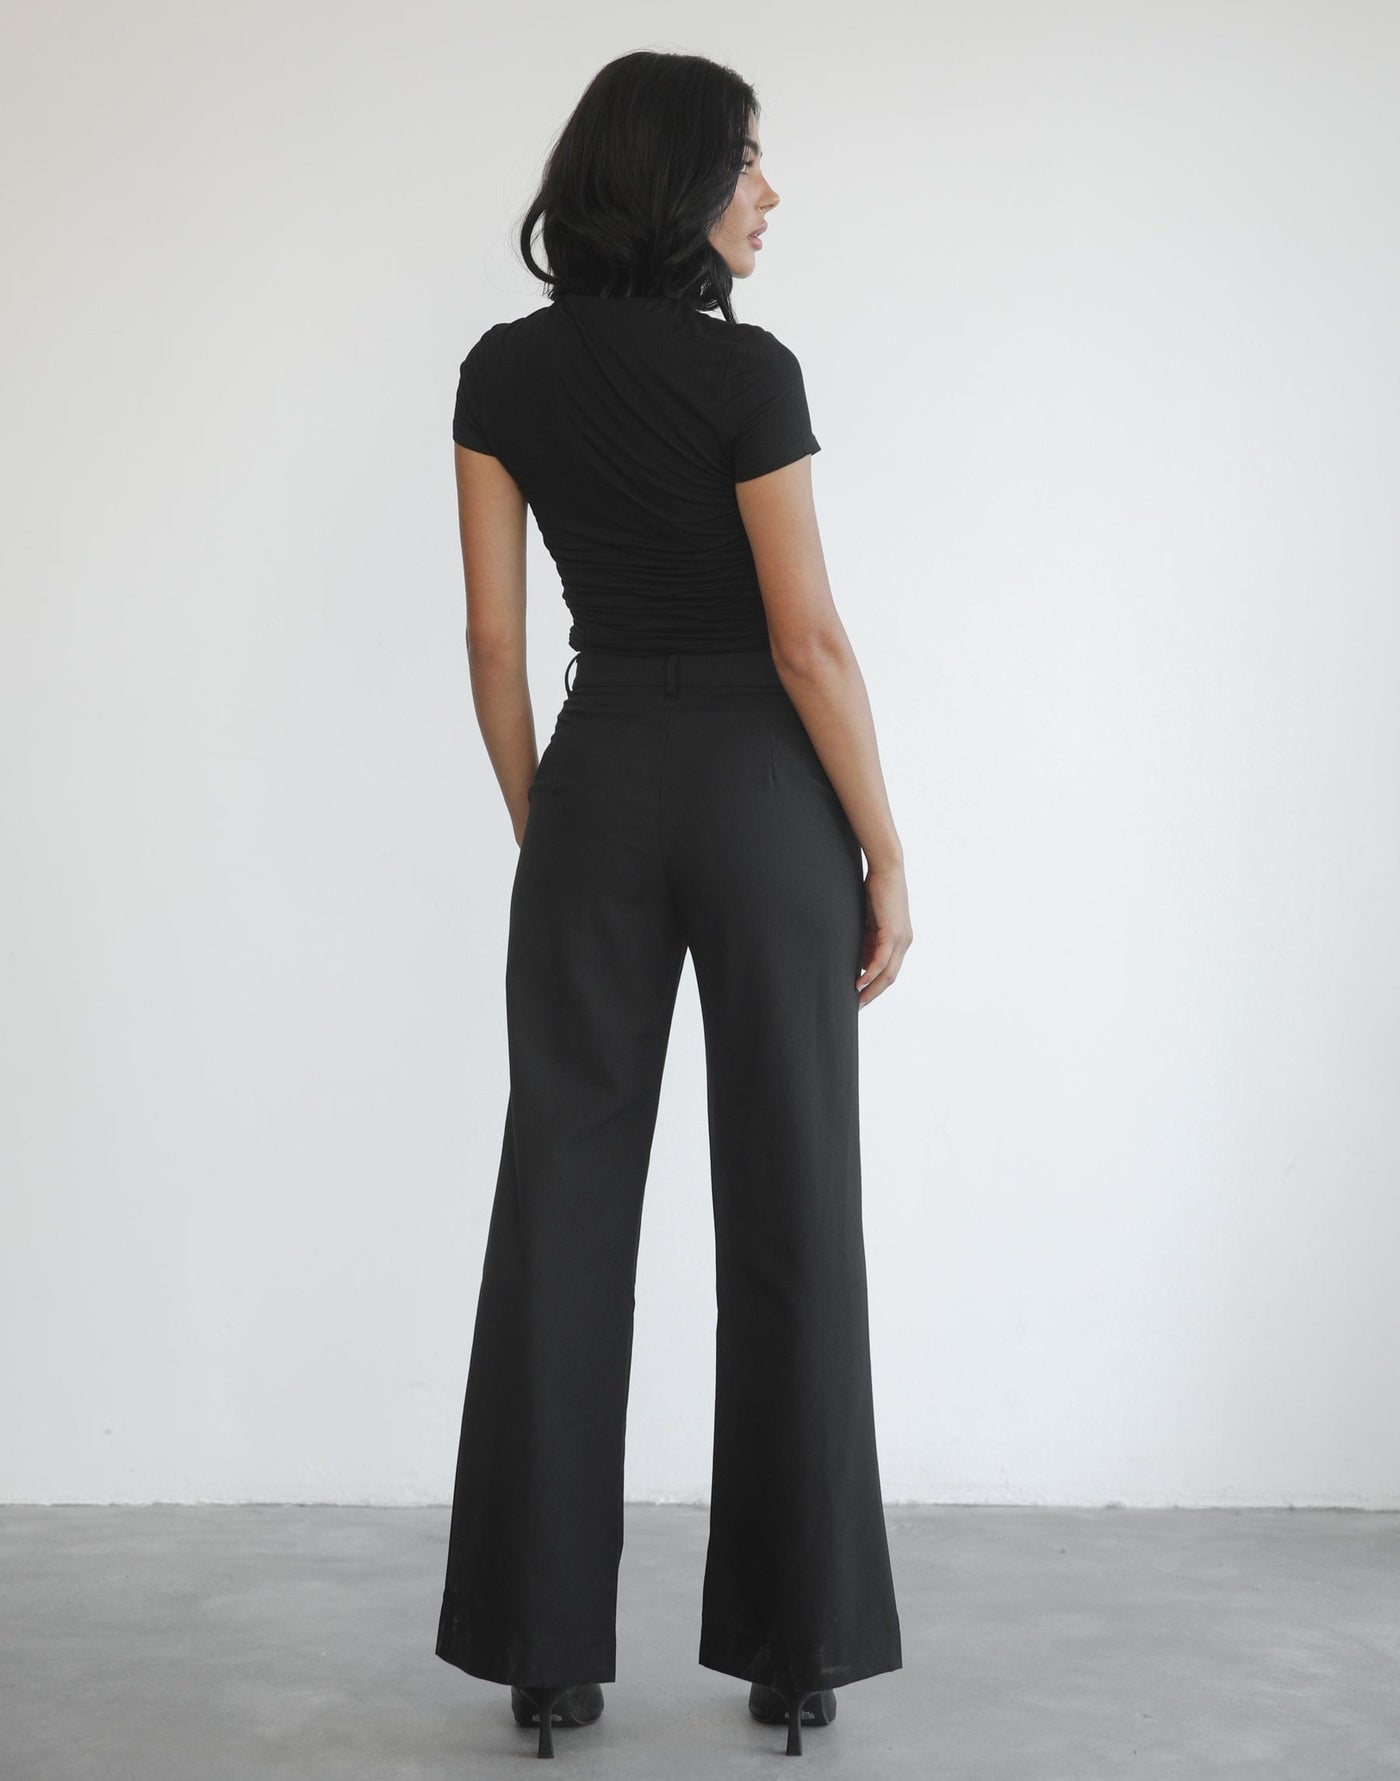 Essence Pants (Black) - Wide Leg Pants - Women's Pants - Charcoal Clothing